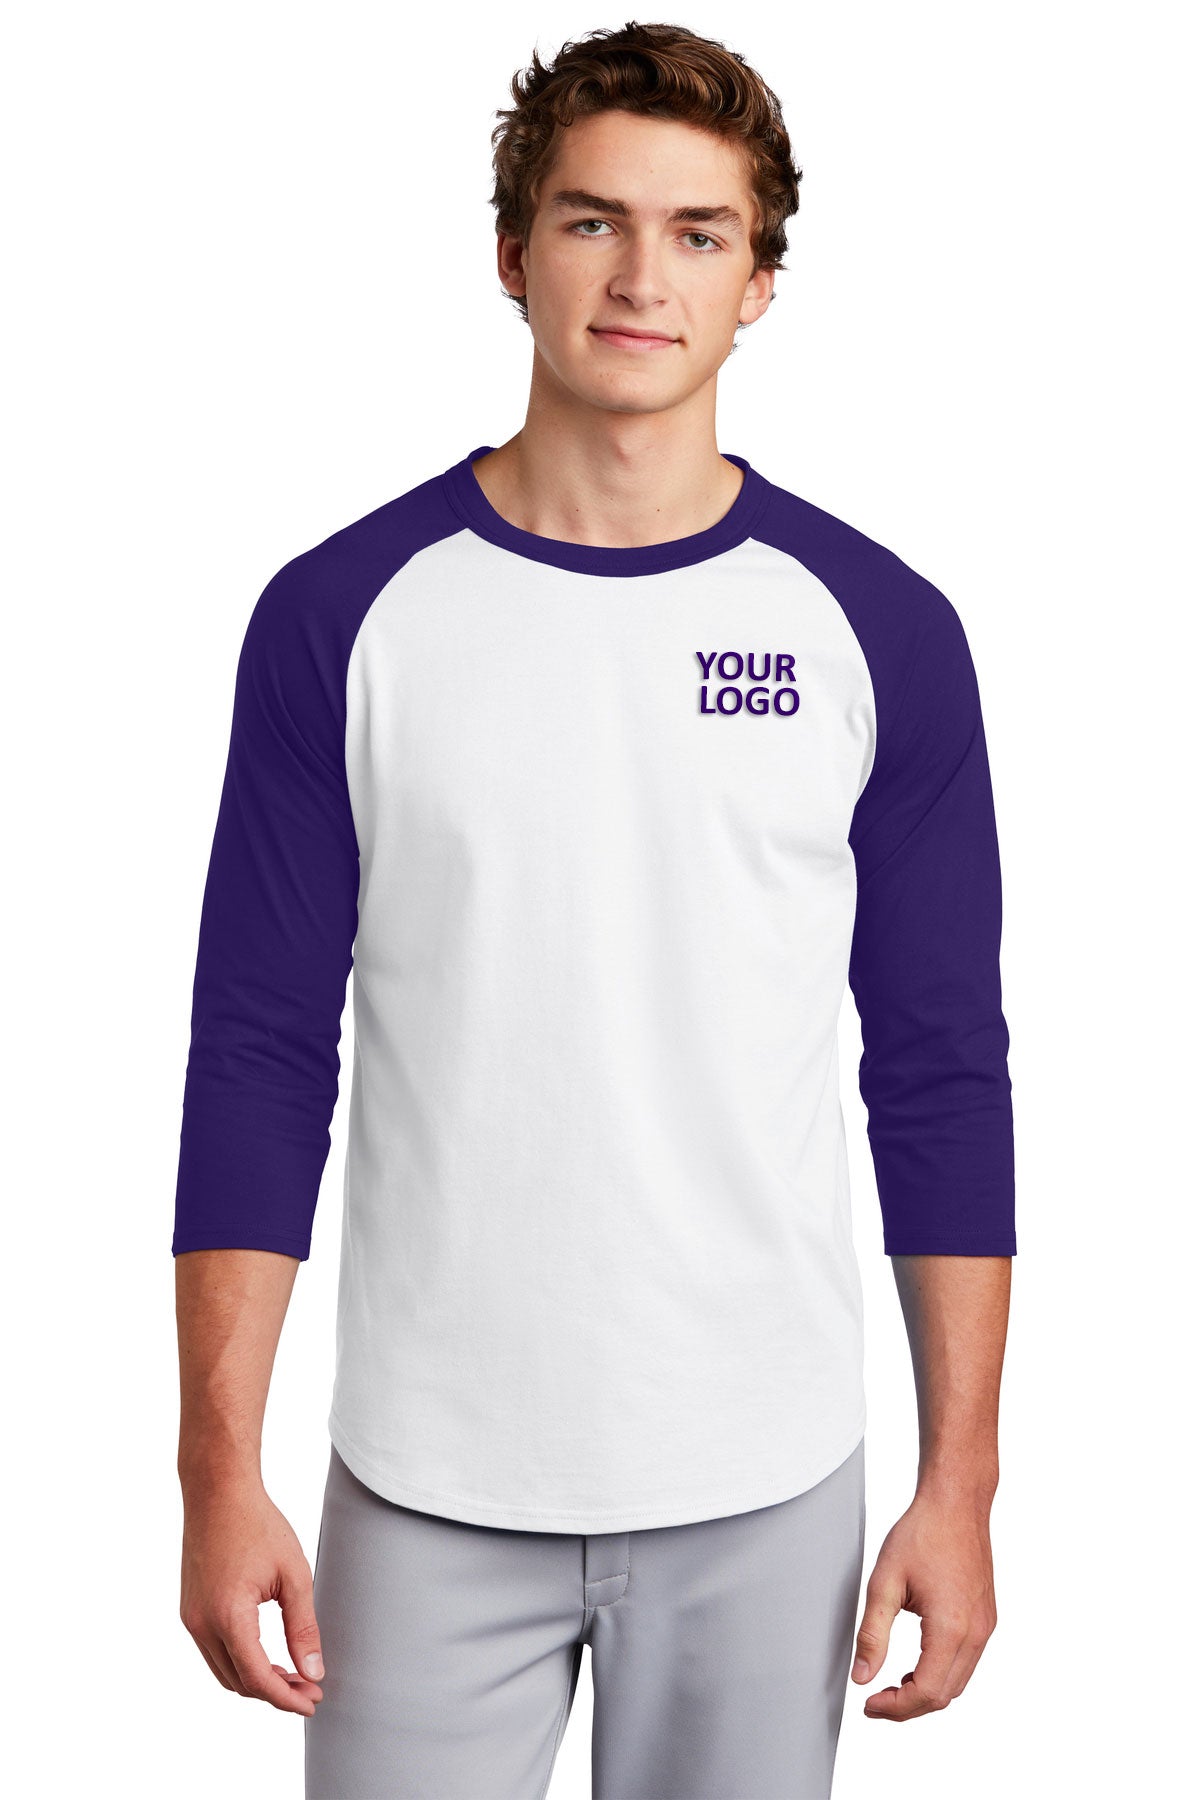 Sport-Tek Customized Colorblock Raglan Jerseys, White/Purple